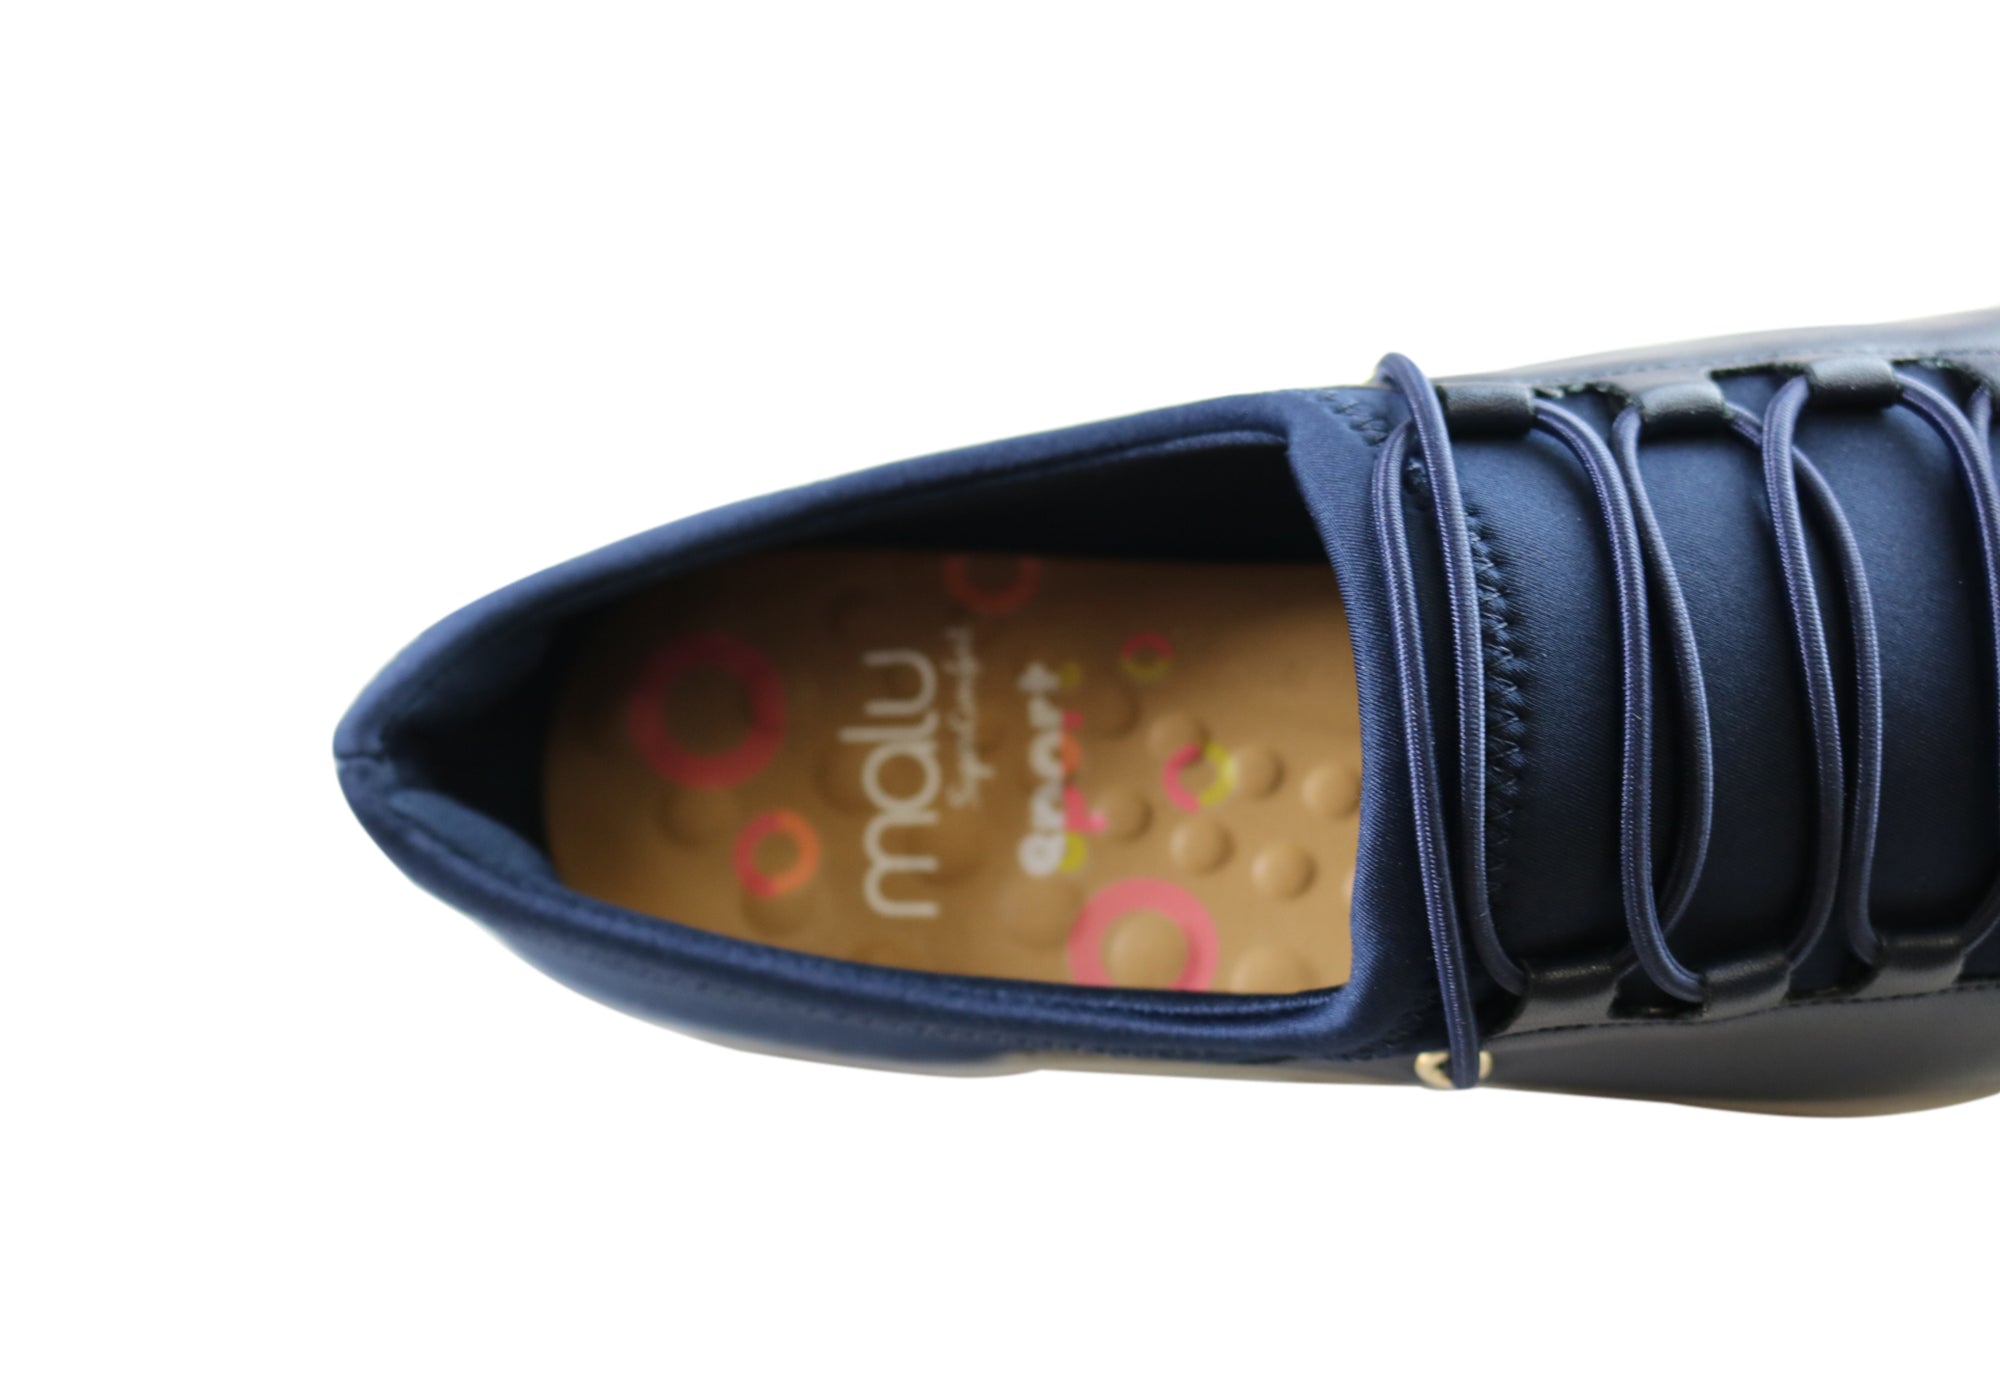 Malu Supercomfort Imogen Womens Comfort Casual Shoes Made In Brazil